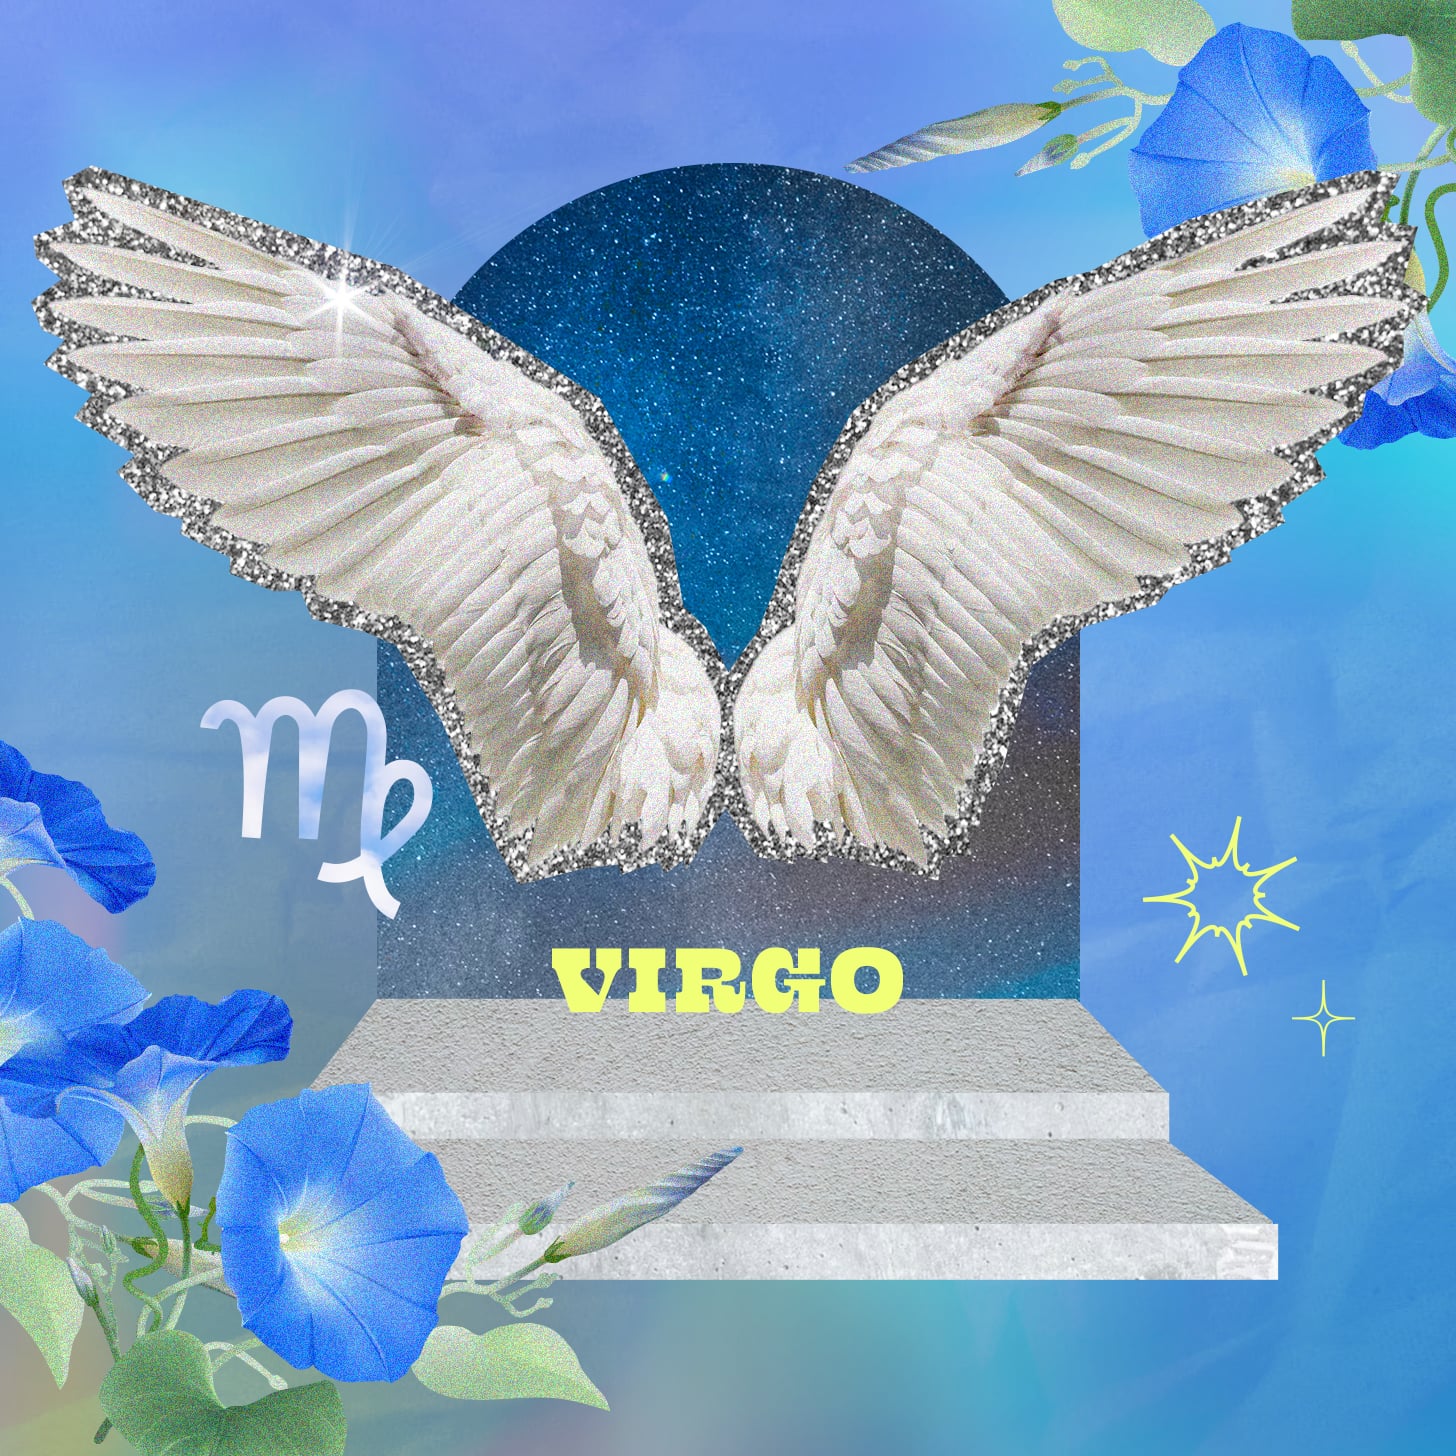 Virgo weekly horoscope for July 17, 2022